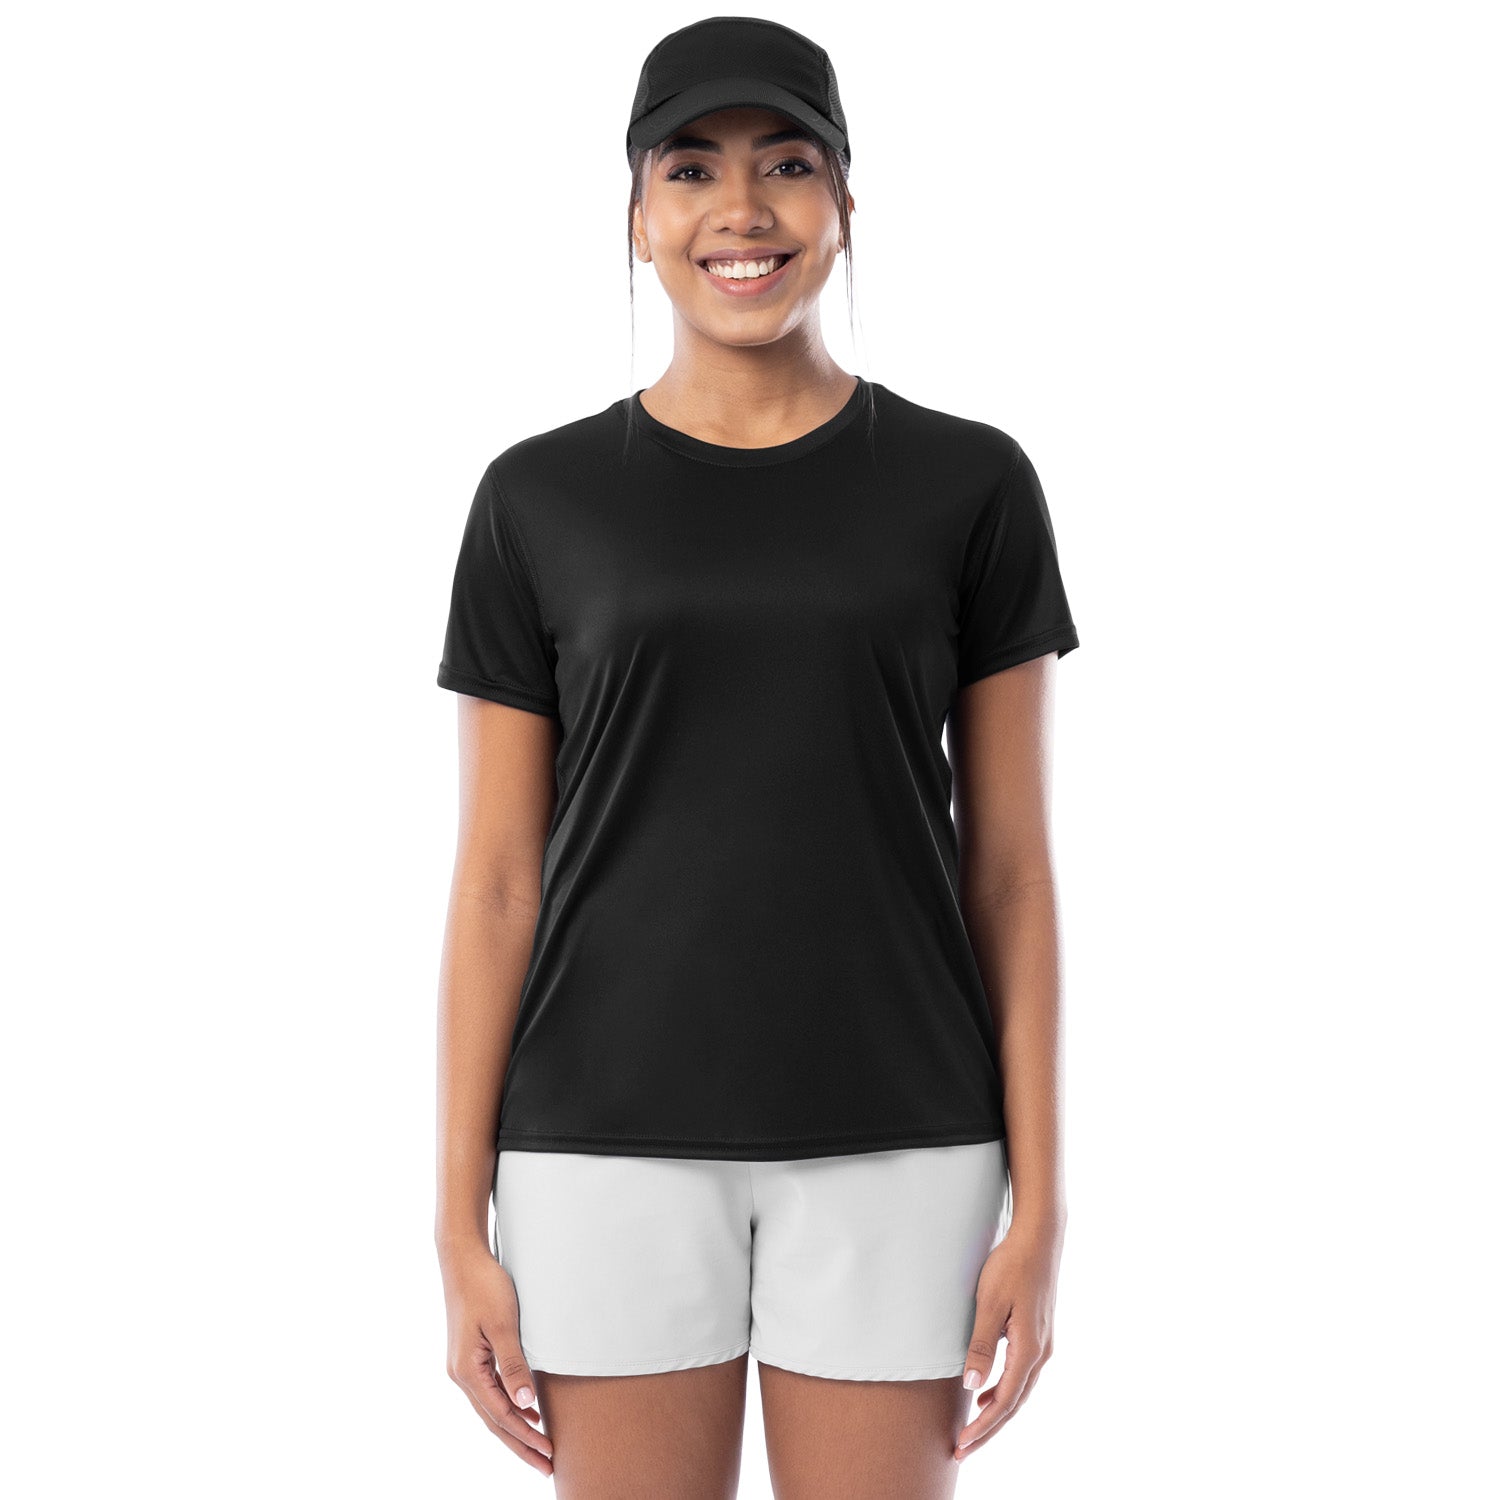 Women's Black Training T-Shirt Front View